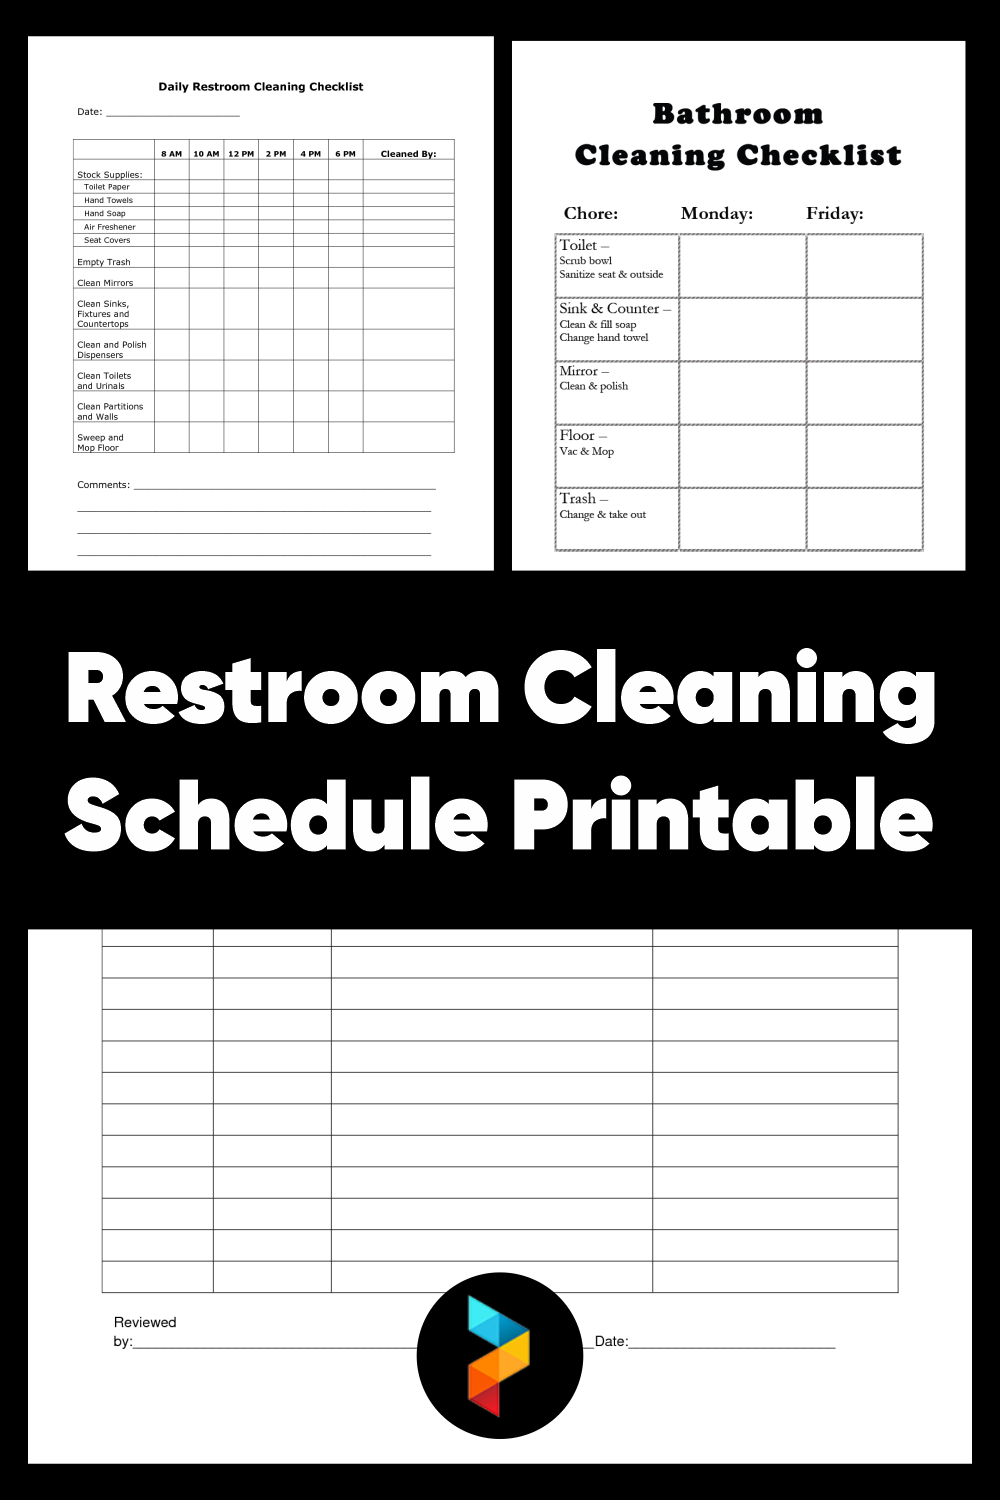 Restroom Cleaning Schedule Printable